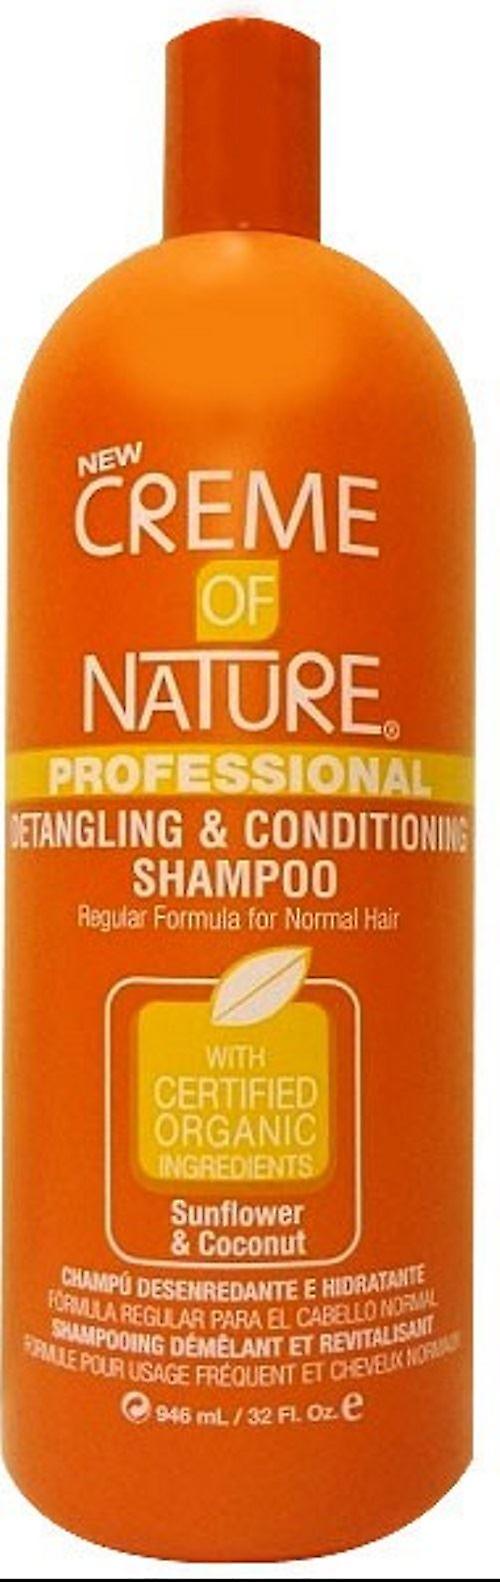 Creme of Nature Professional Detangling & Conditioning Shampoo 946ml